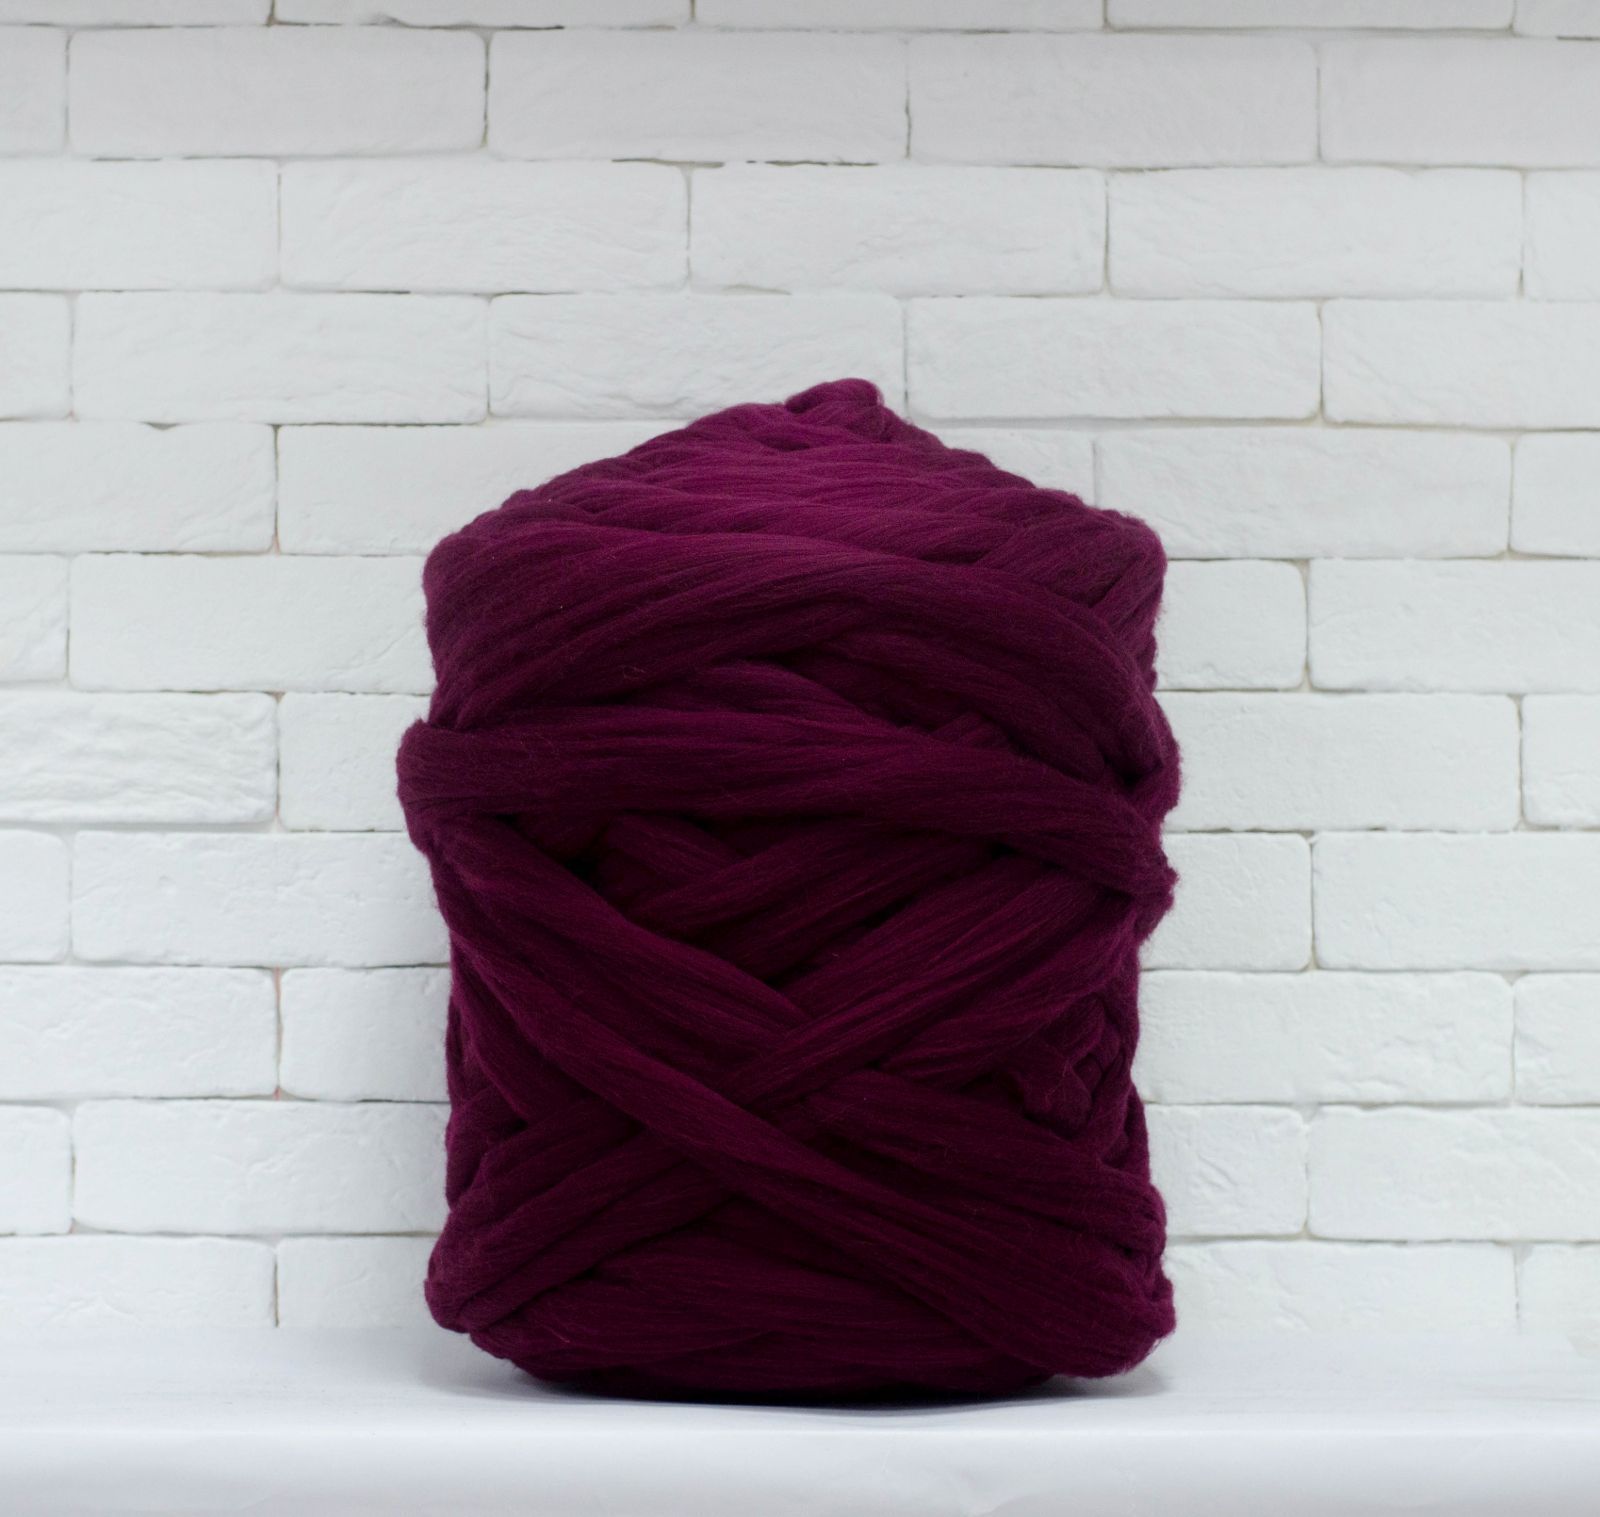 Giant Yarn, Chunky Yarn for Hand Knitting, 100% Merino Wool Yarn Super  Bulky Yarn, Merino Wool Chunky Wool Yarn, Arm Knitting Yarn DIY Gift